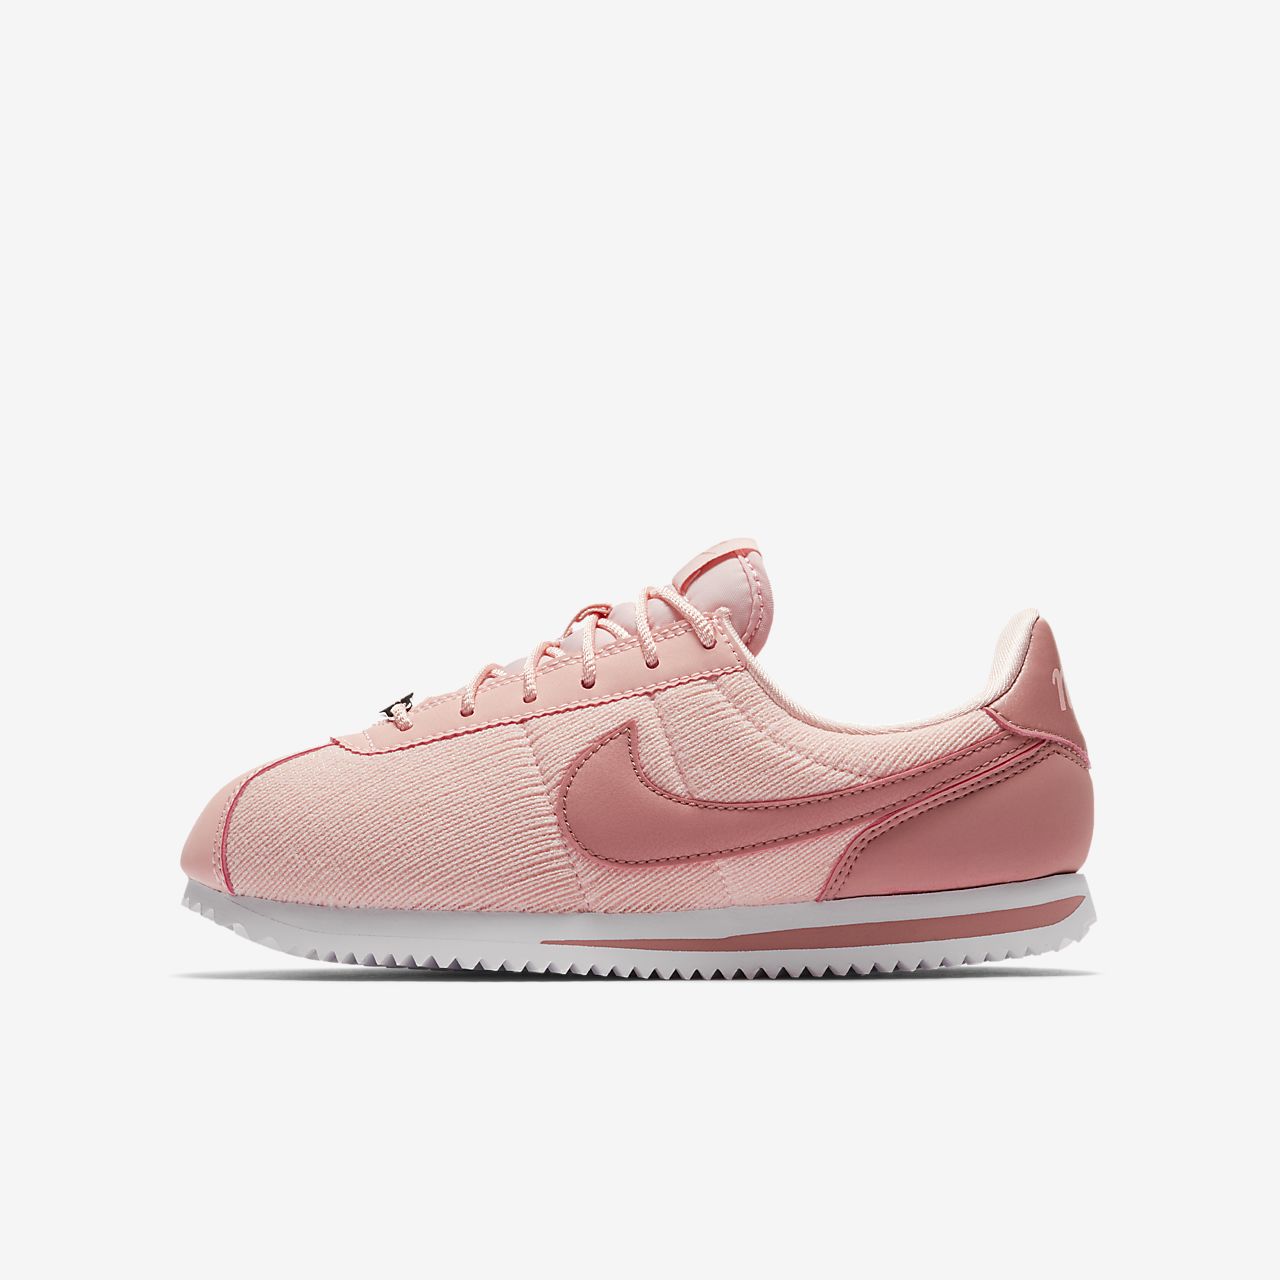 nike cortez pale pink buy clothes shoes 